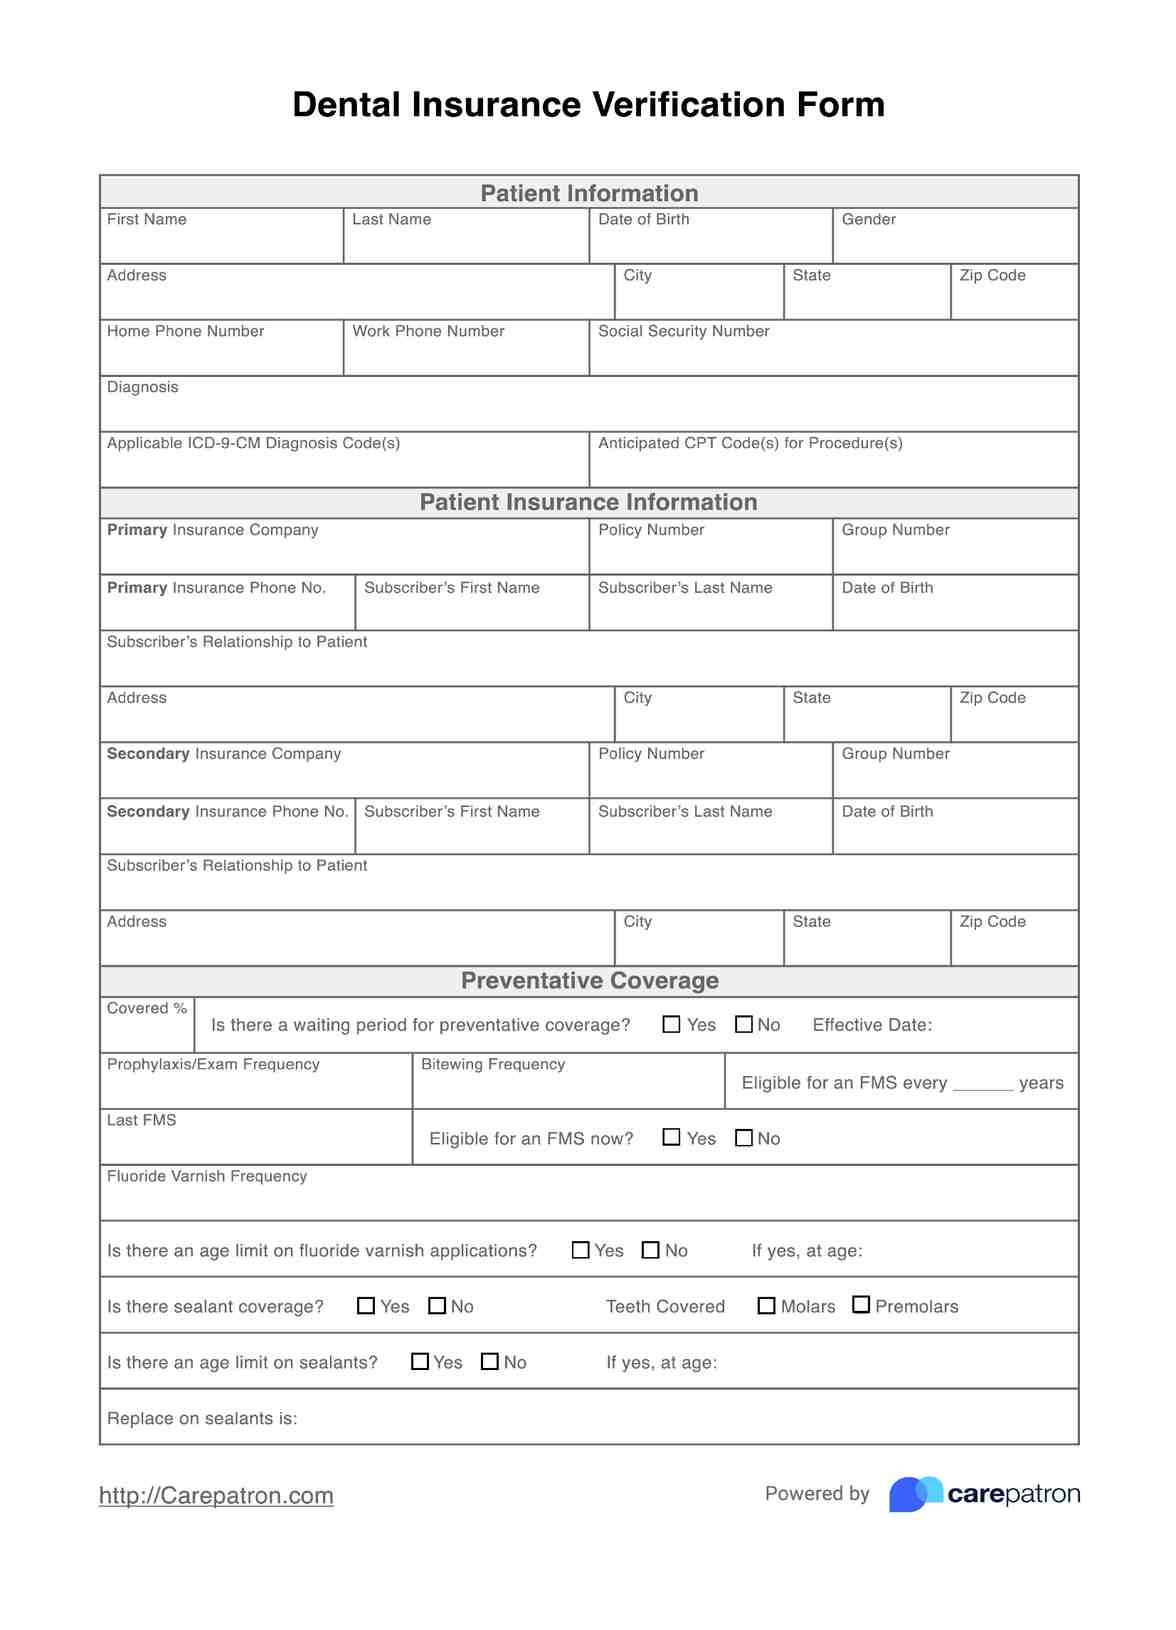 Dental Insurance Verification Form PDF Example